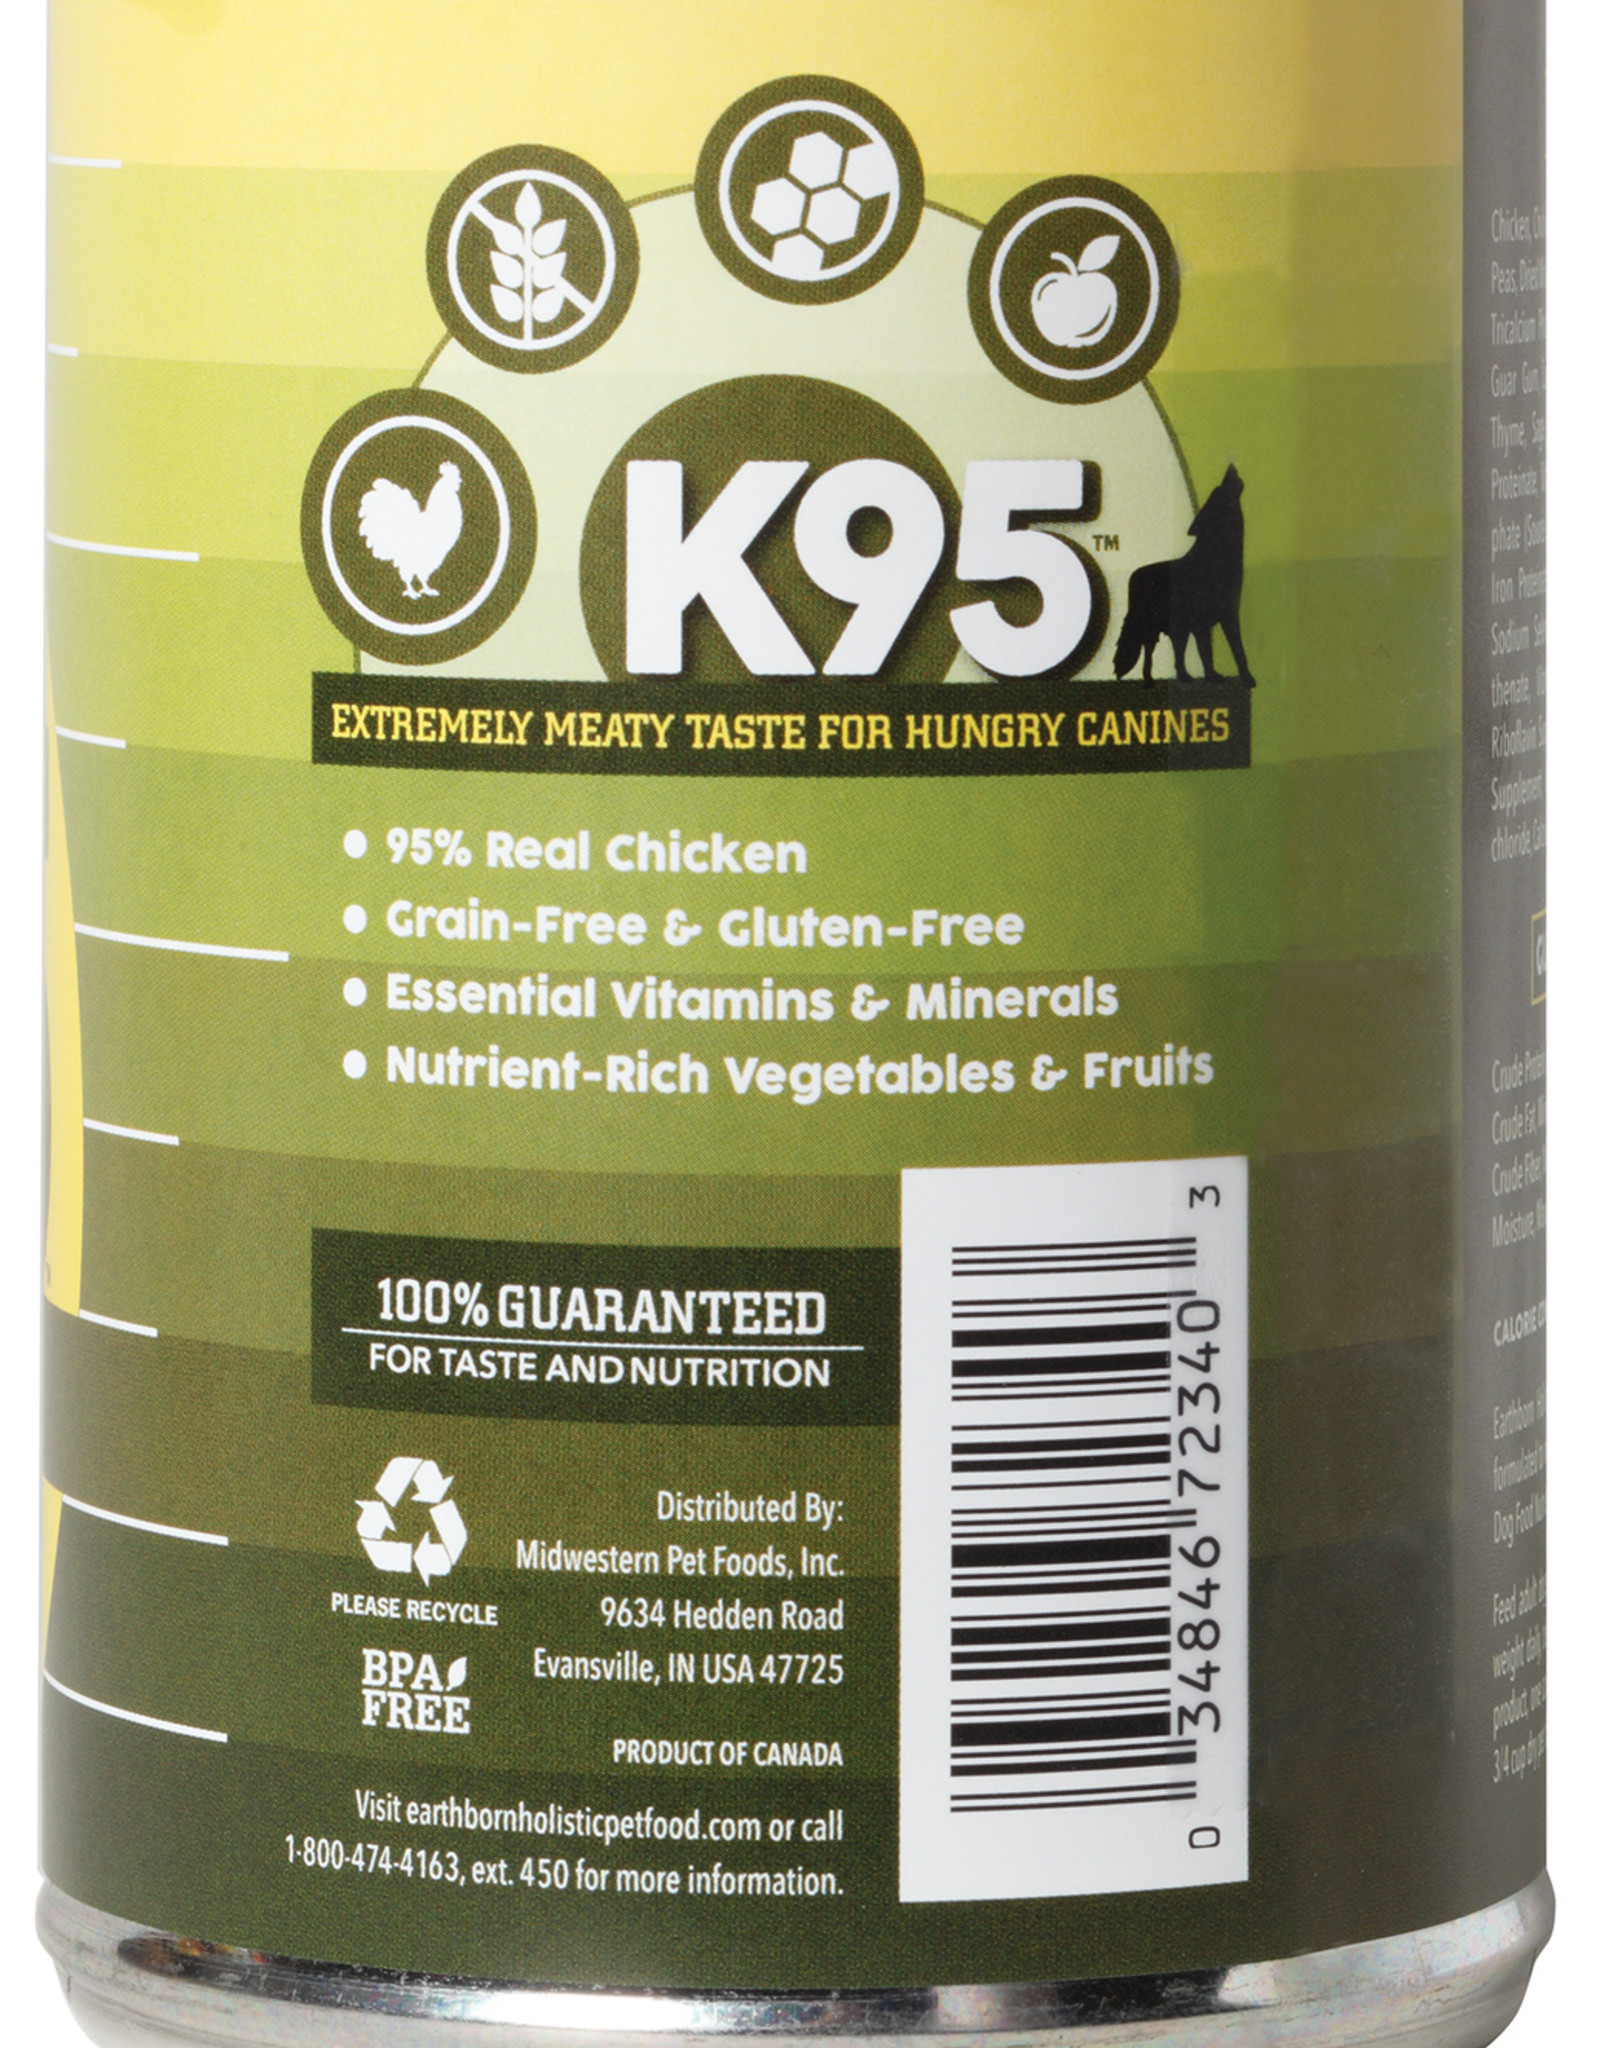 k95 dog food